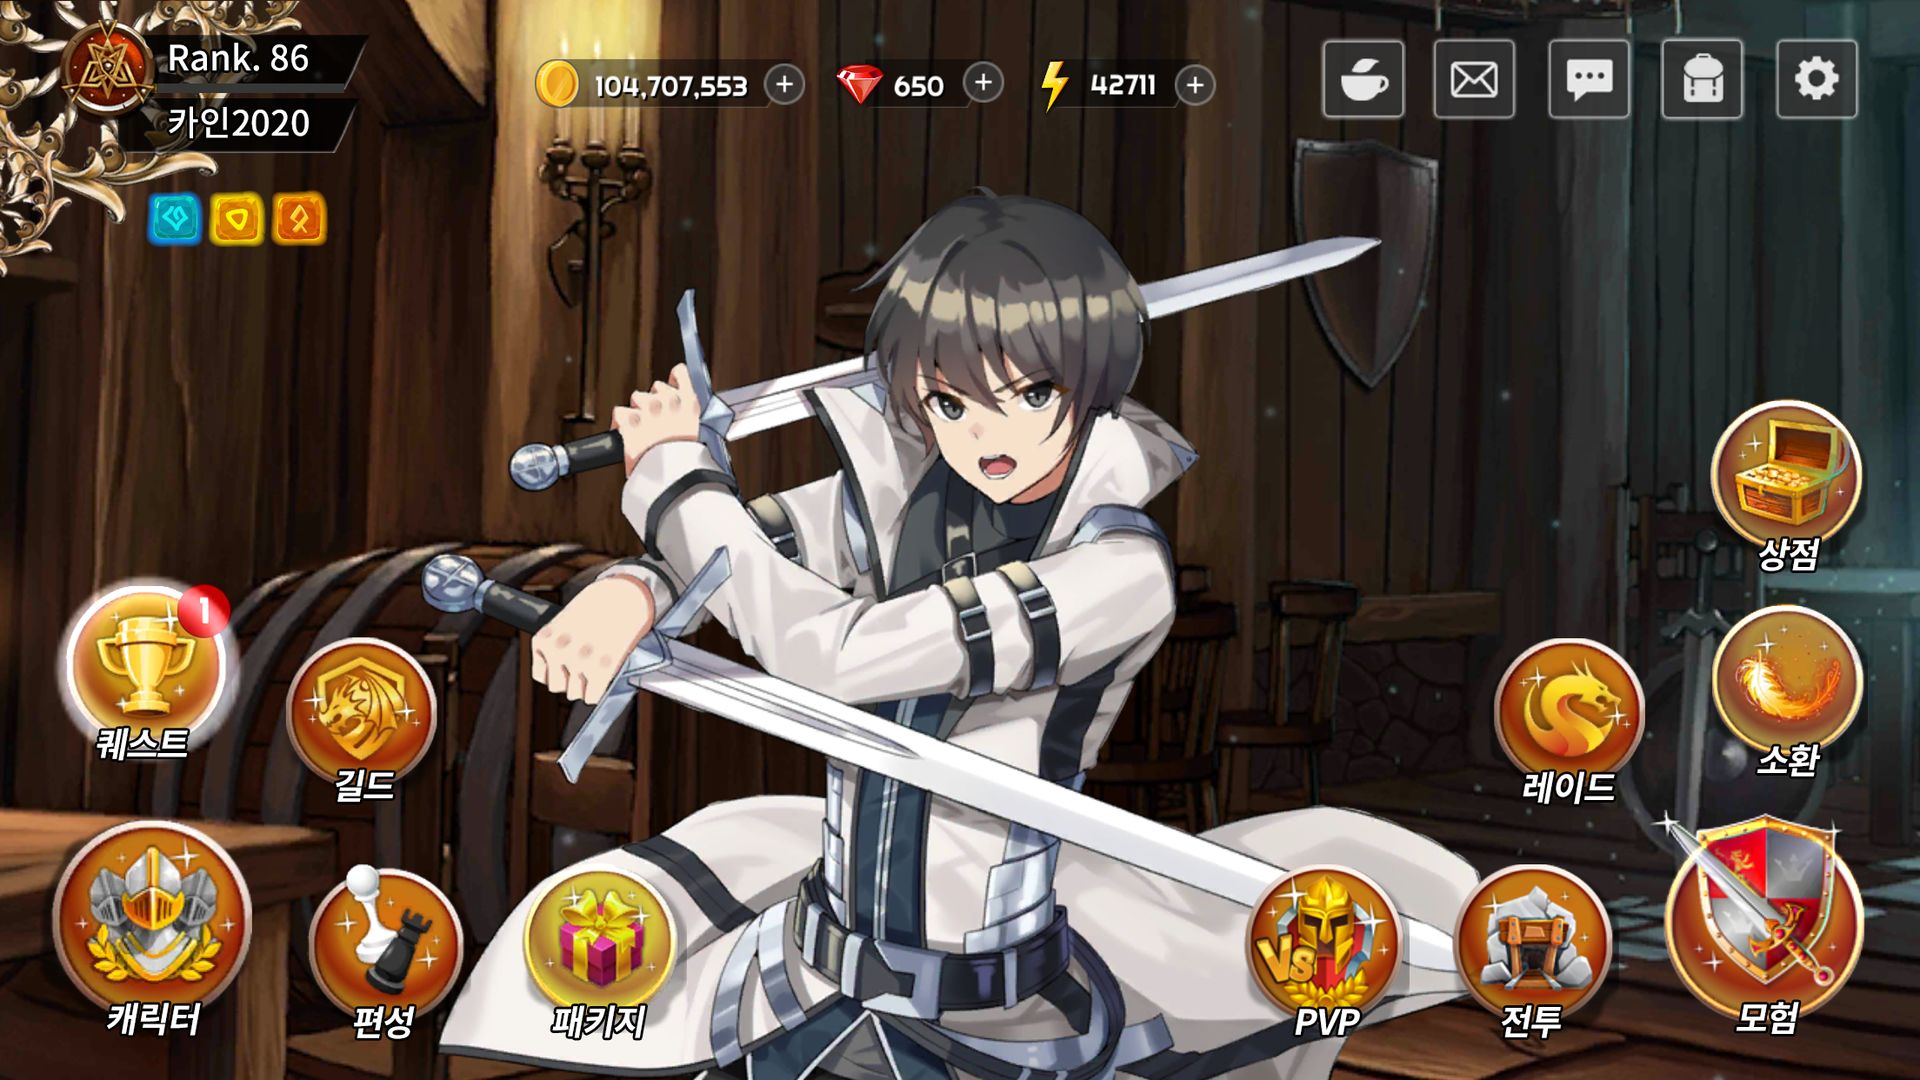 Screenshot of Sword Master Story